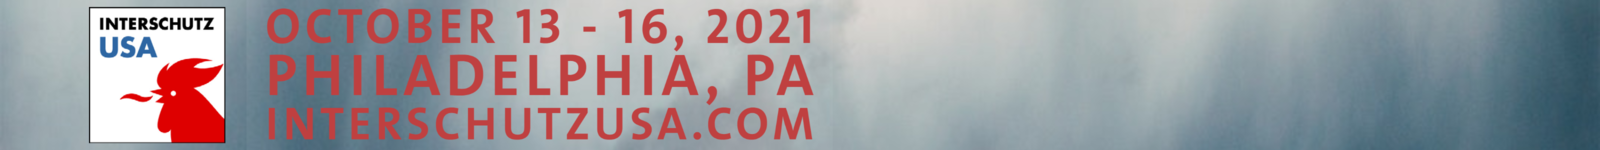 Interschutz USA 2021 logo